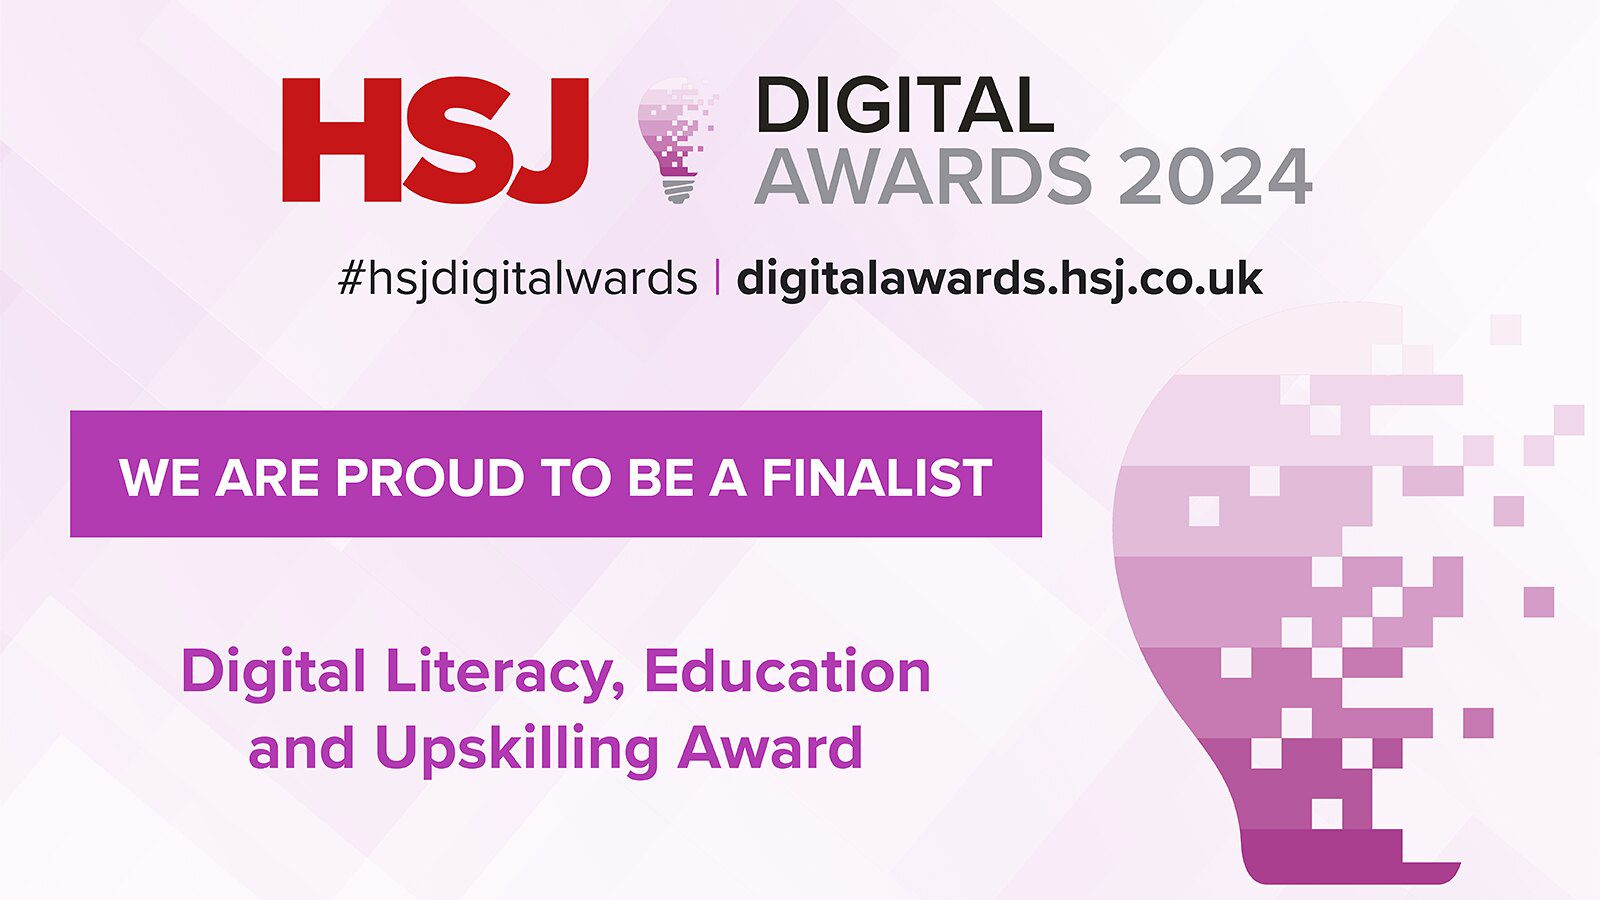 South West London Digital Pioneer Fellowship Shortlisted for the 2024 HSJ Digital Awards - DigitalHealth.London